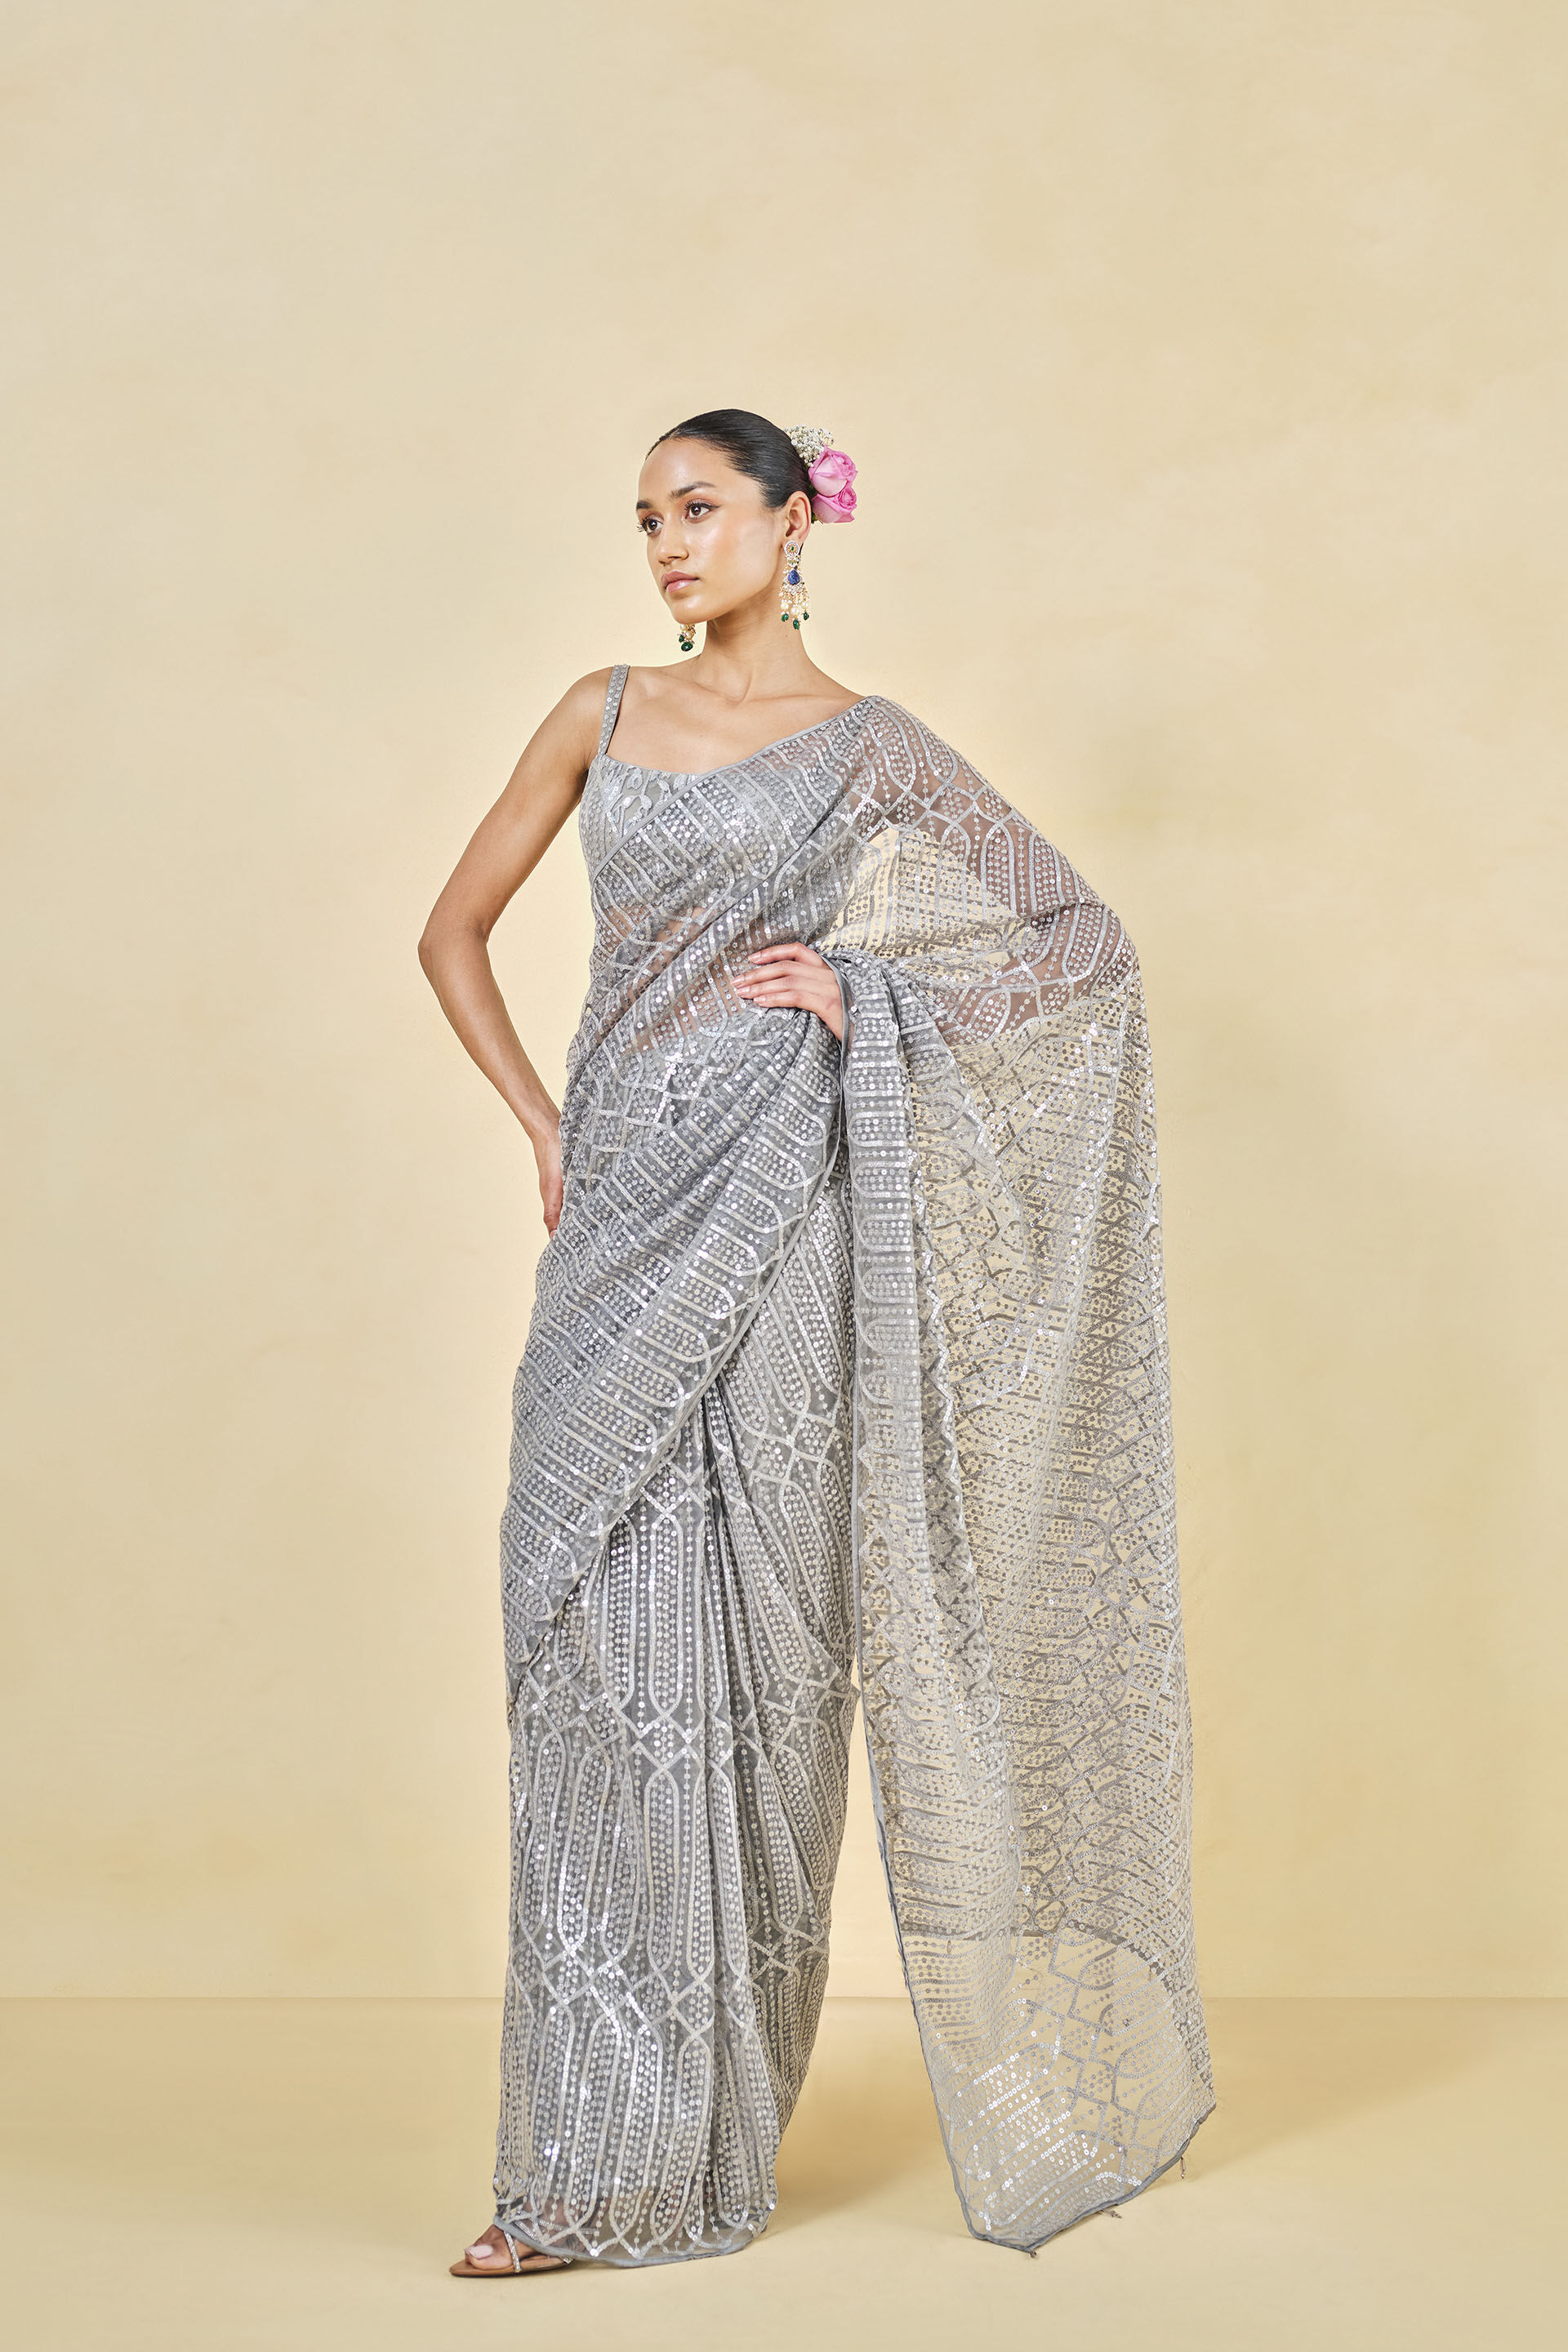 Modern Sri Lankan Saree Blouse Designs and Design Ideas - Latest Indian  Saree Blouse Designs: for more designer Sarees please visit - http://saree-jacket-designs.blogspot.com  | Facebook